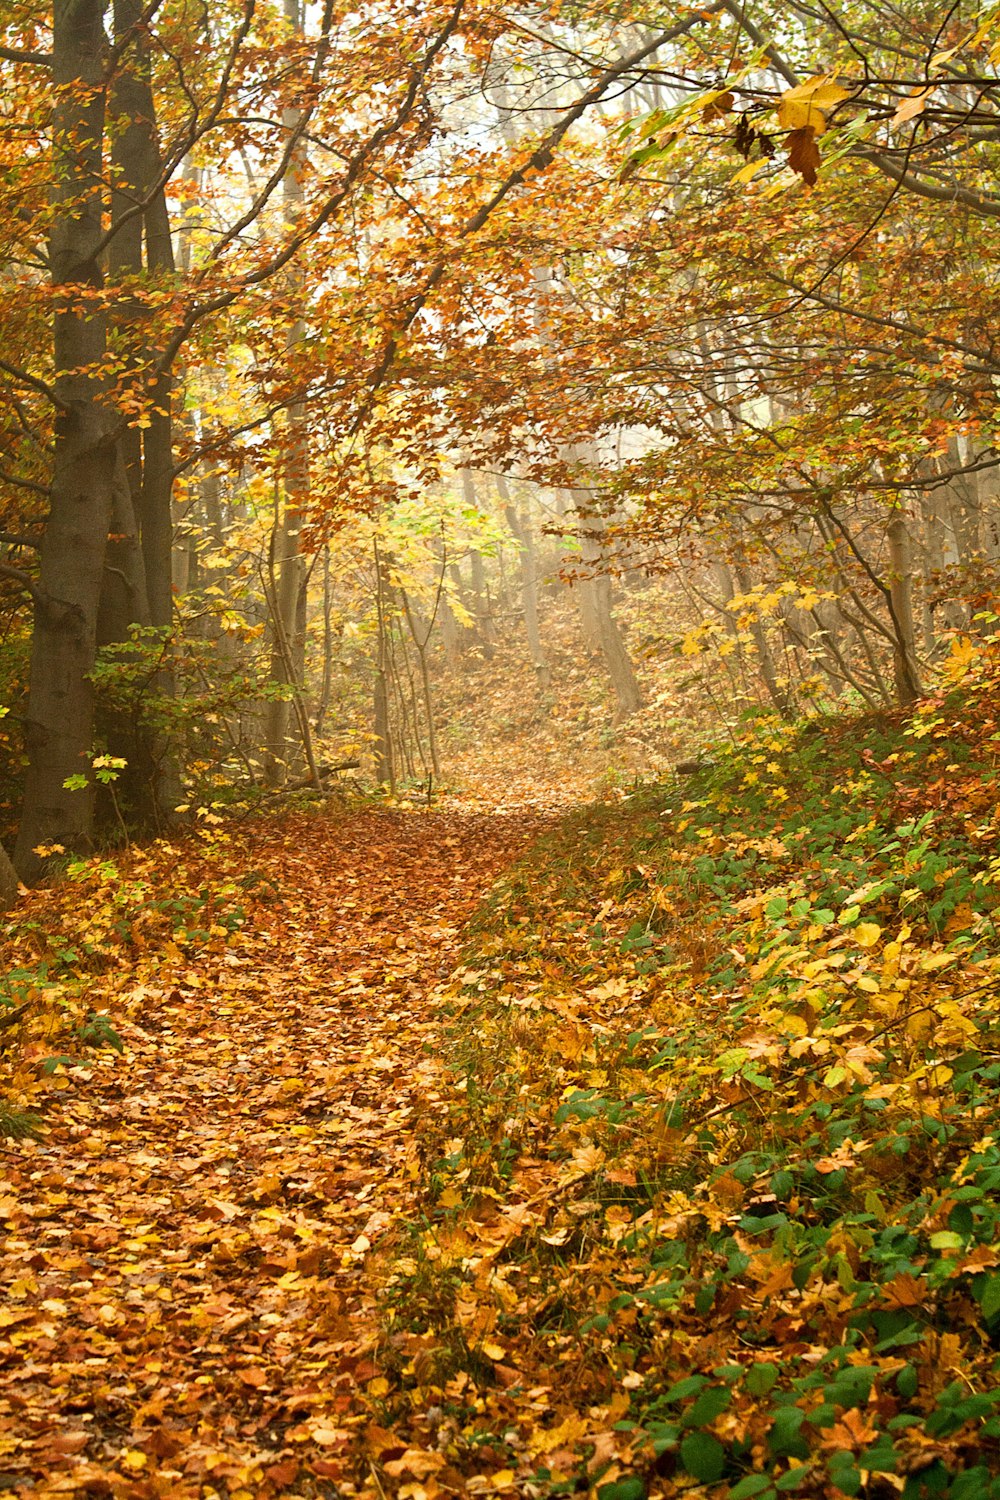 500+ Autumn Images  Download Free Images on Unsplash